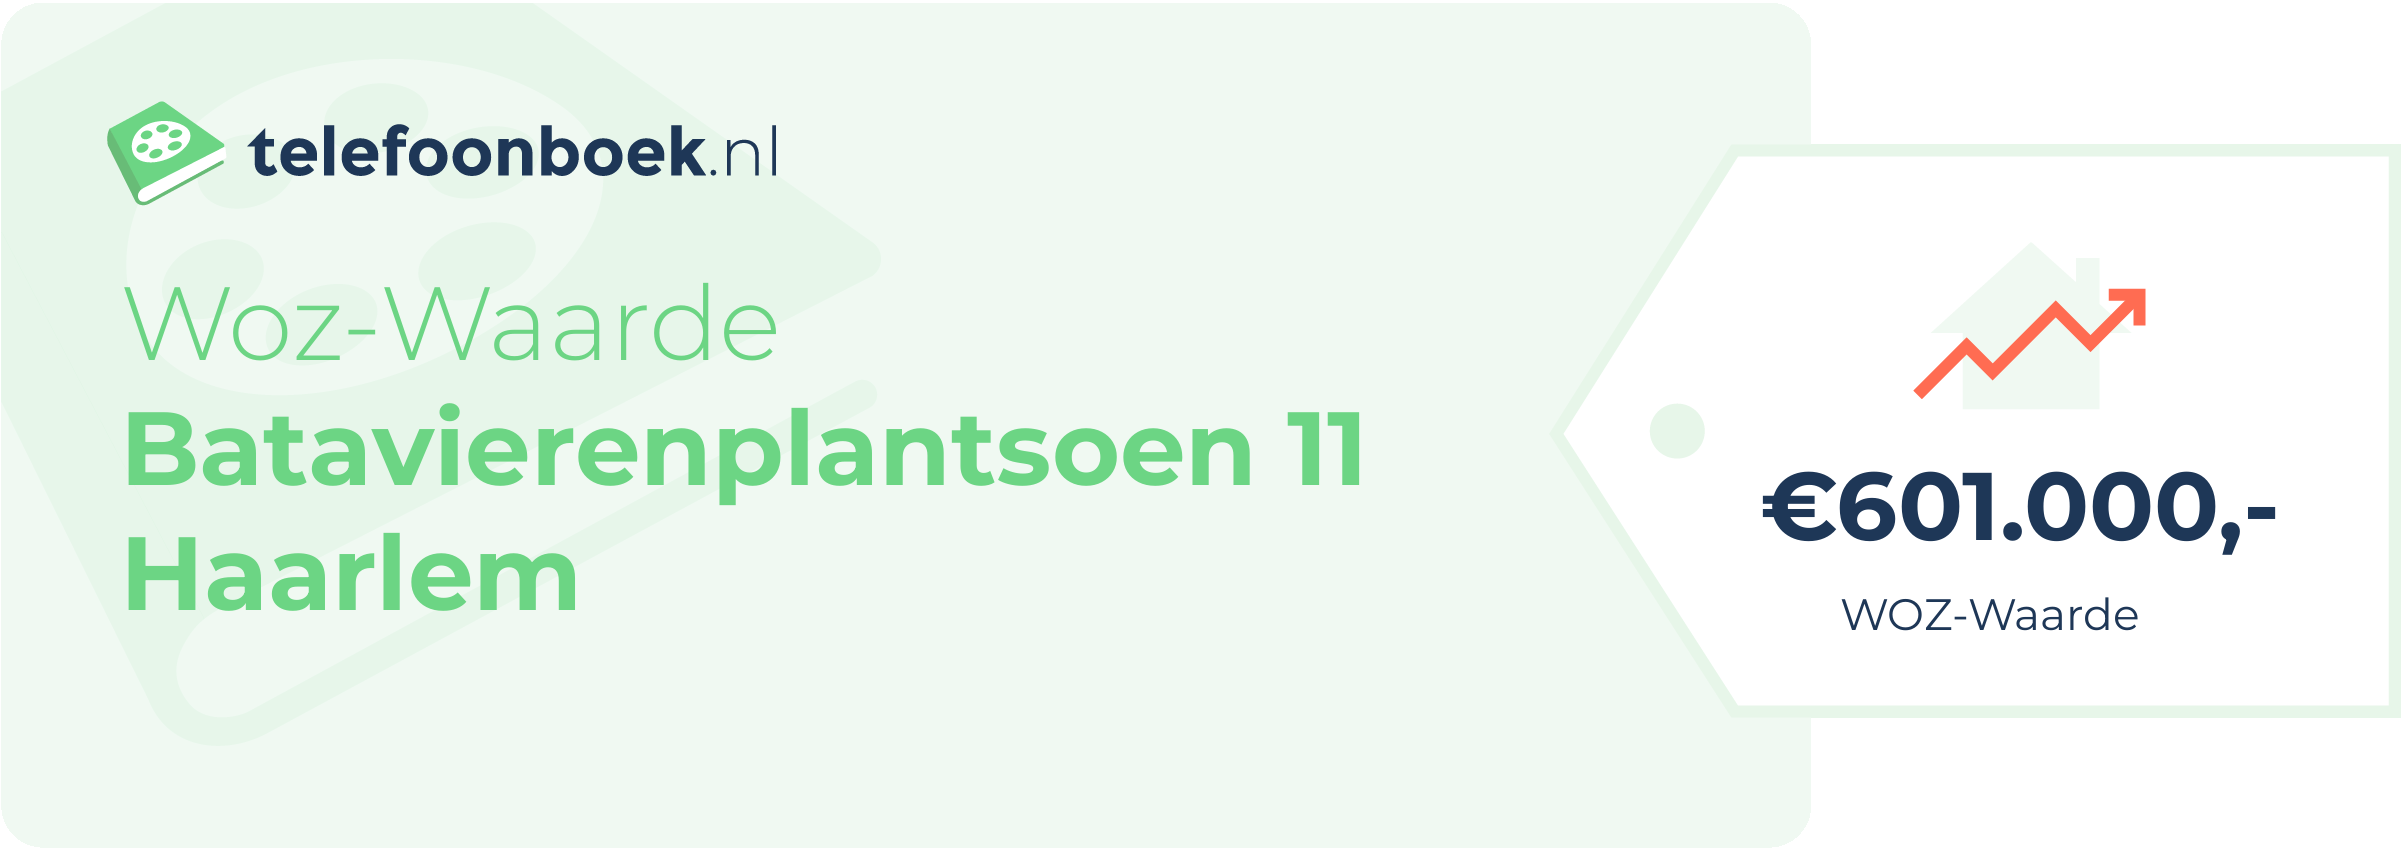 WOZ-waarde Batavierenplantsoen 11 Haarlem